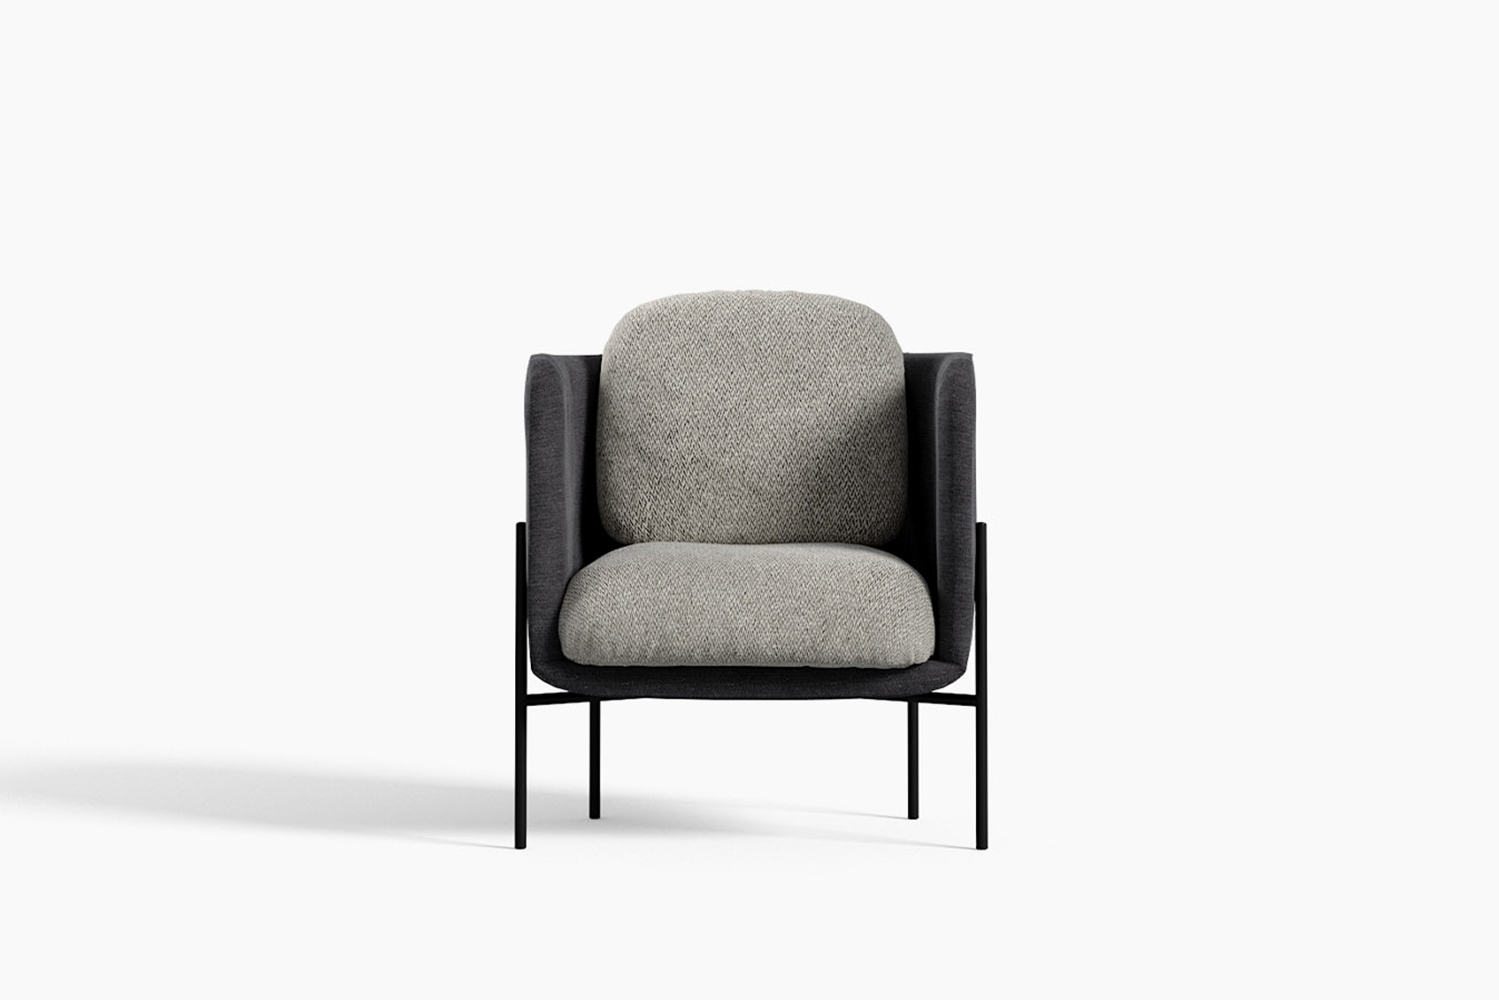 Haiku luxury Italian modern armchair by Novamobili. Sold by Krieder UK.